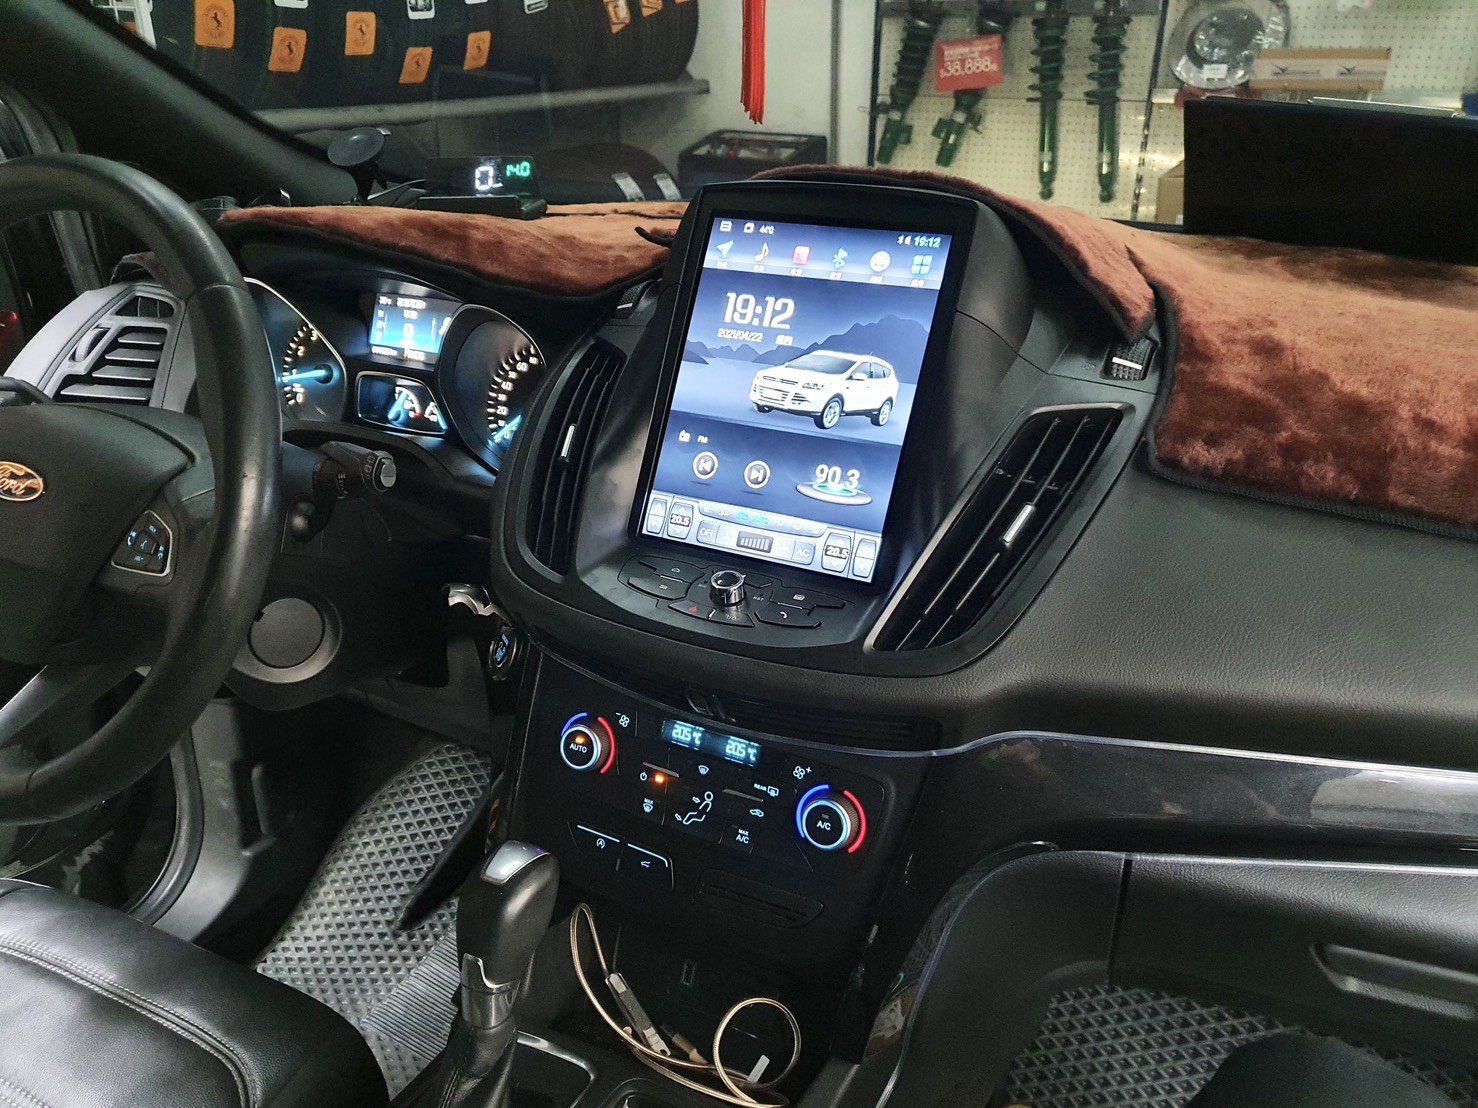 Ford 福特 KUGA 10.4吋 豎屏 專用機 Android 安卓版觸控螢幕主機 導航/USB/方控/倒車